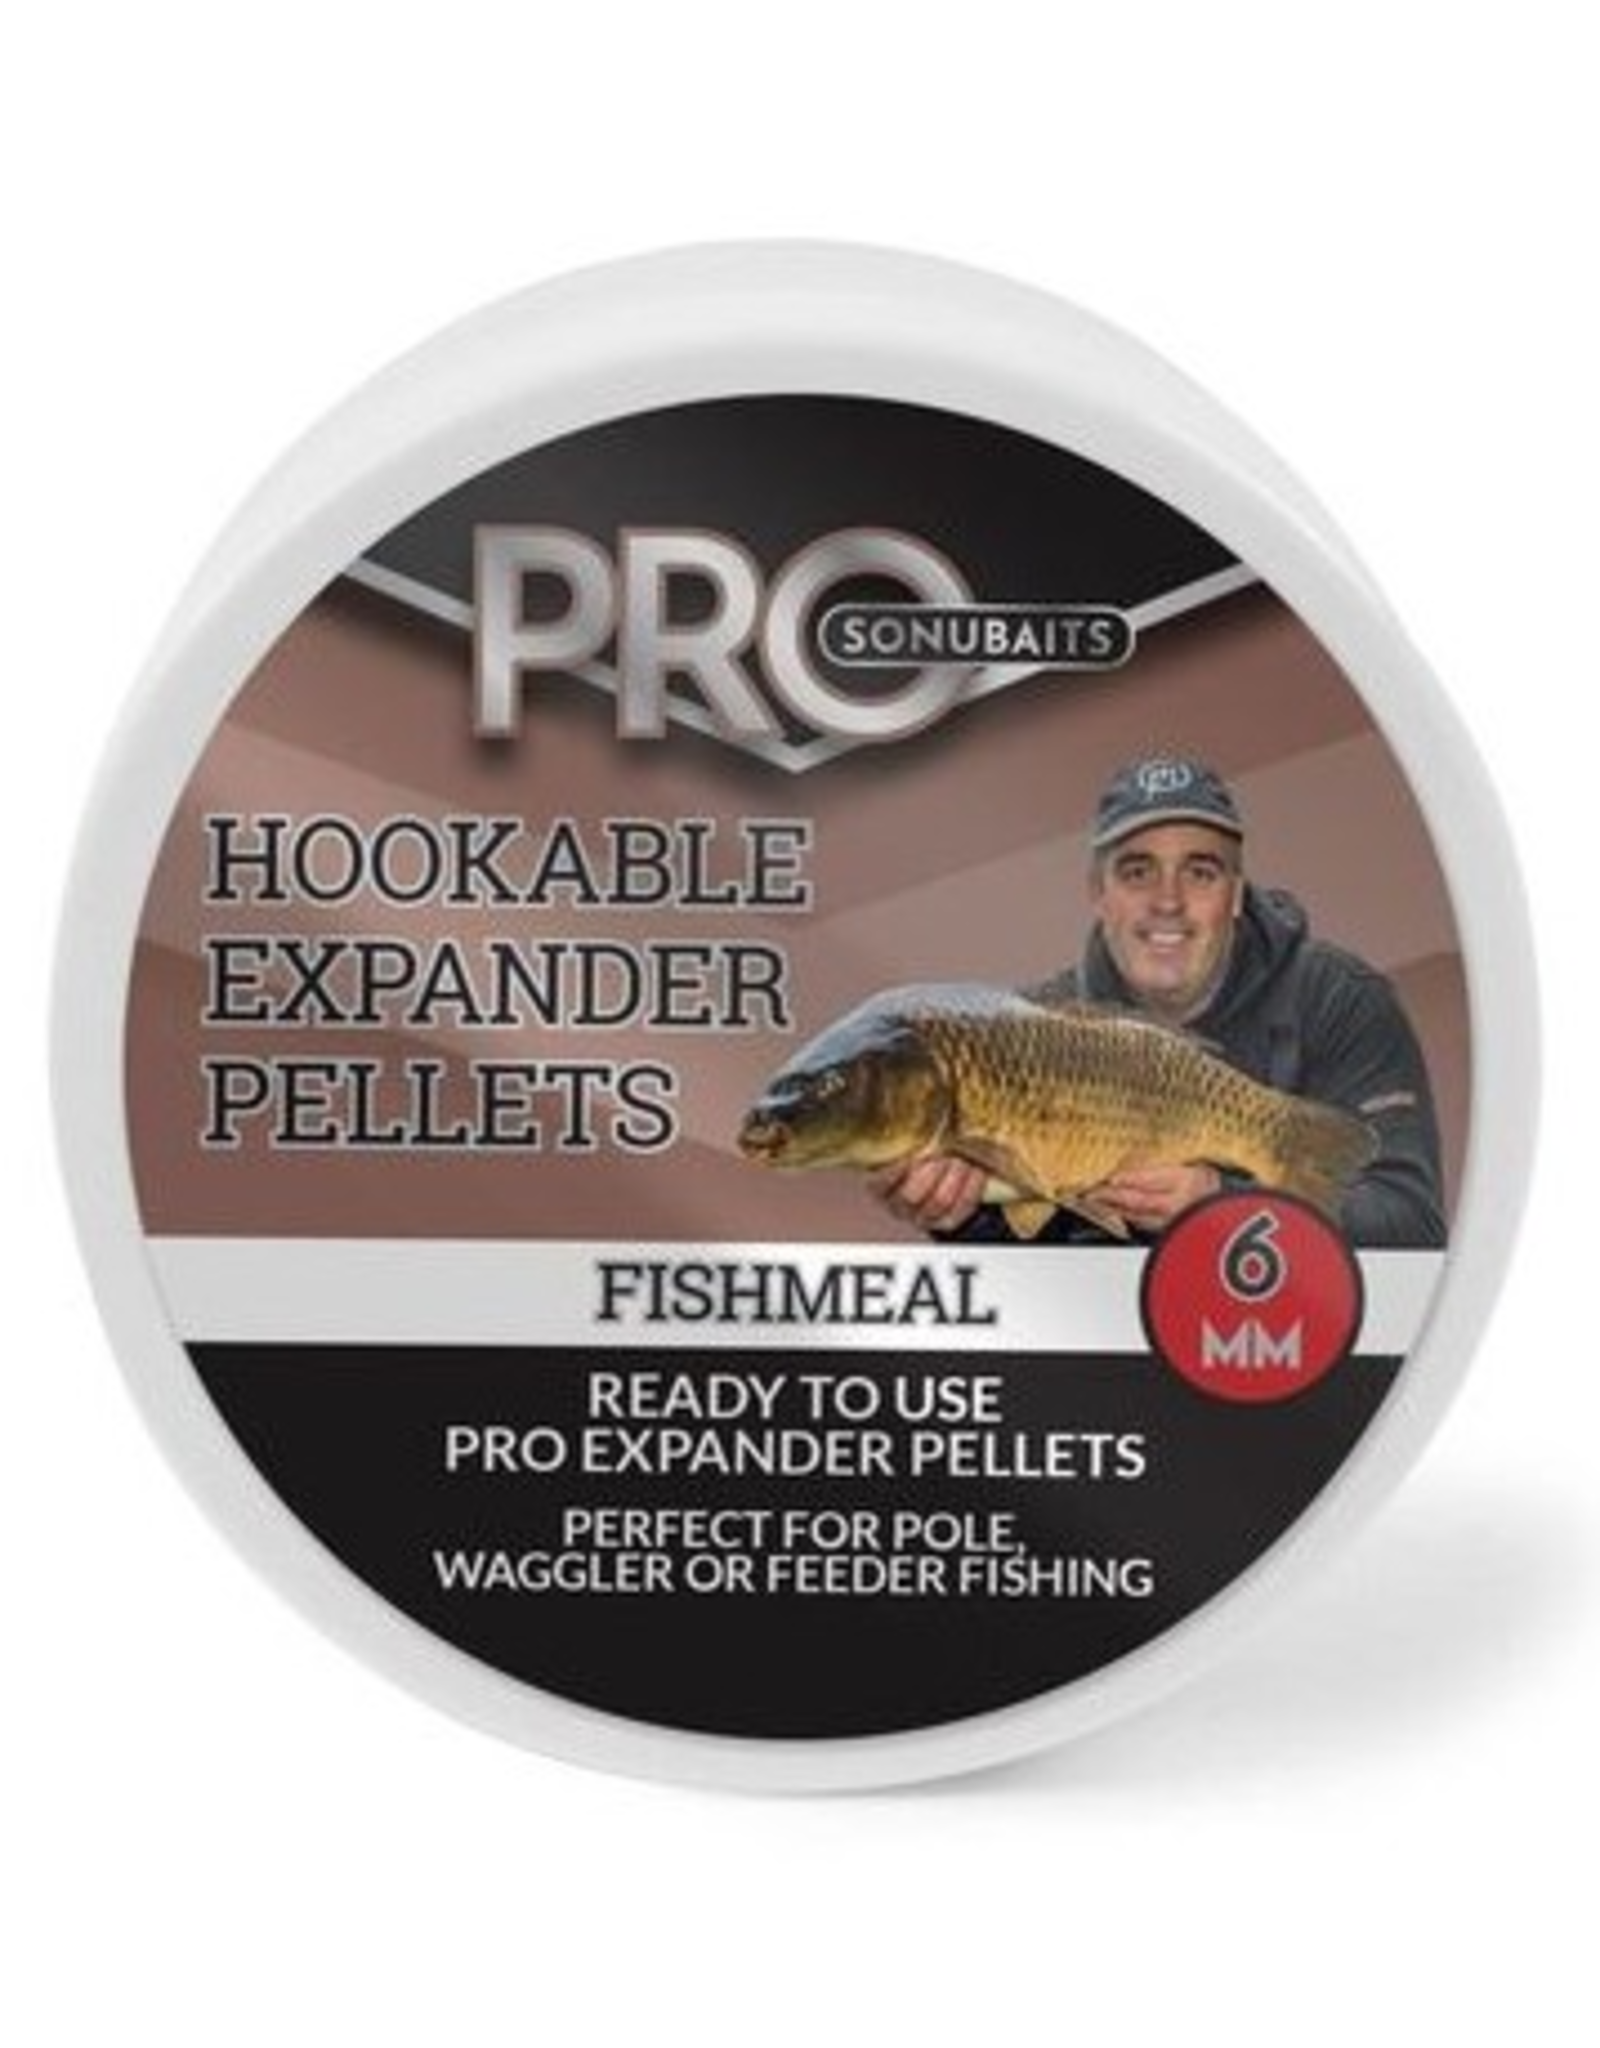 Sonubaits Hookable Pro Expander - Fishmeal 6mm